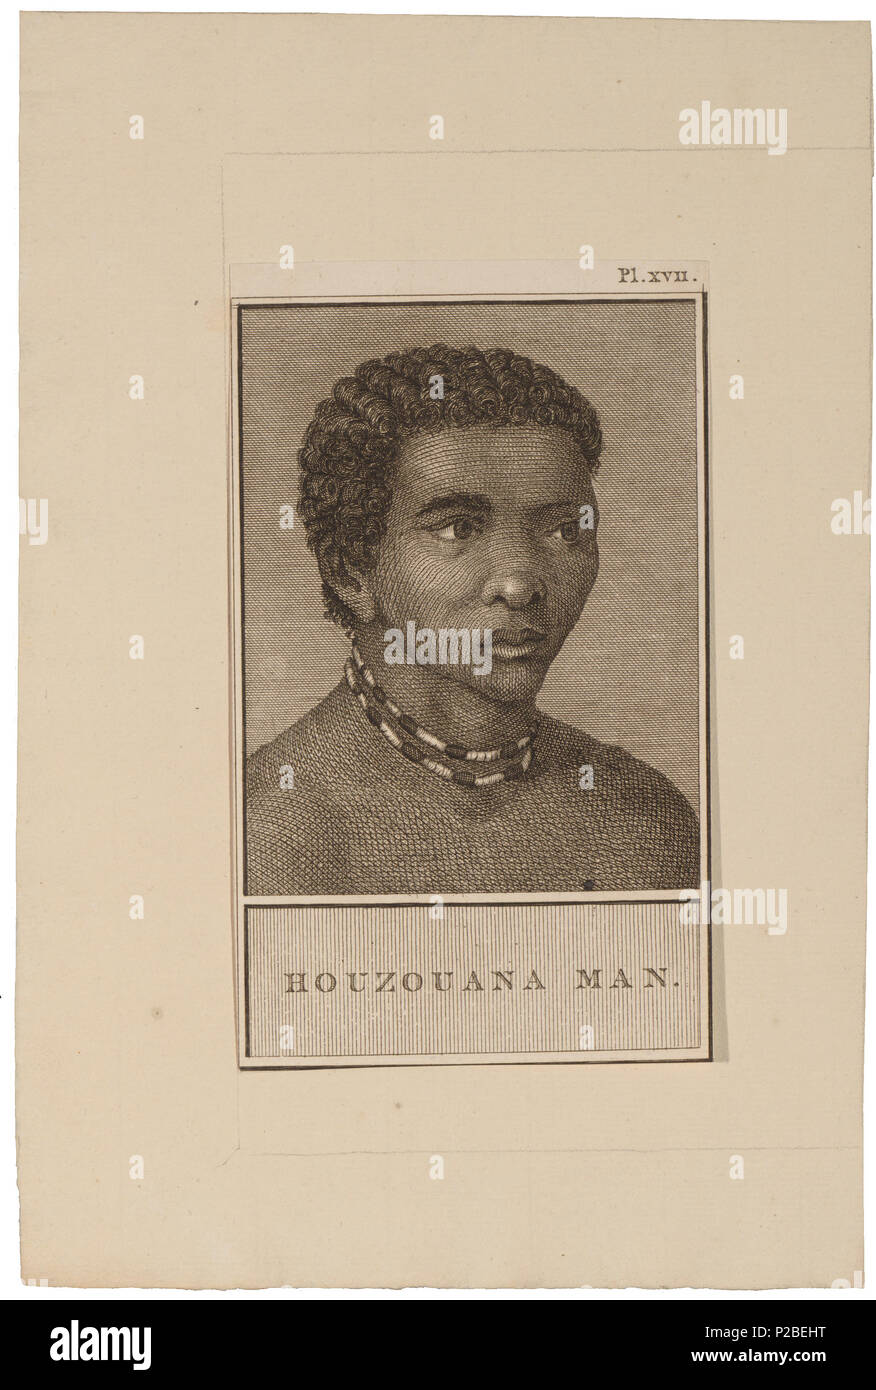 . Homo sapiens - Houzouanaman, Zuid-Afrika . tra il 1700 e il 1880 UBA01 IZ19400122-t, 17-09-09, 14:04, 8C, 7008x9898 (673+425), 100%%%%, BasisCurve Arte, 1/50 s, R49.6, G19.4, B12.4 151 Homo sapiens - Houzouanaman, Zuid-Afrika - 1700-1880 - Stampa - Iconographia Zoologica - Collezioni Speciali Università di Amsterdam - UBA01 IZ19400113 Foto Stock